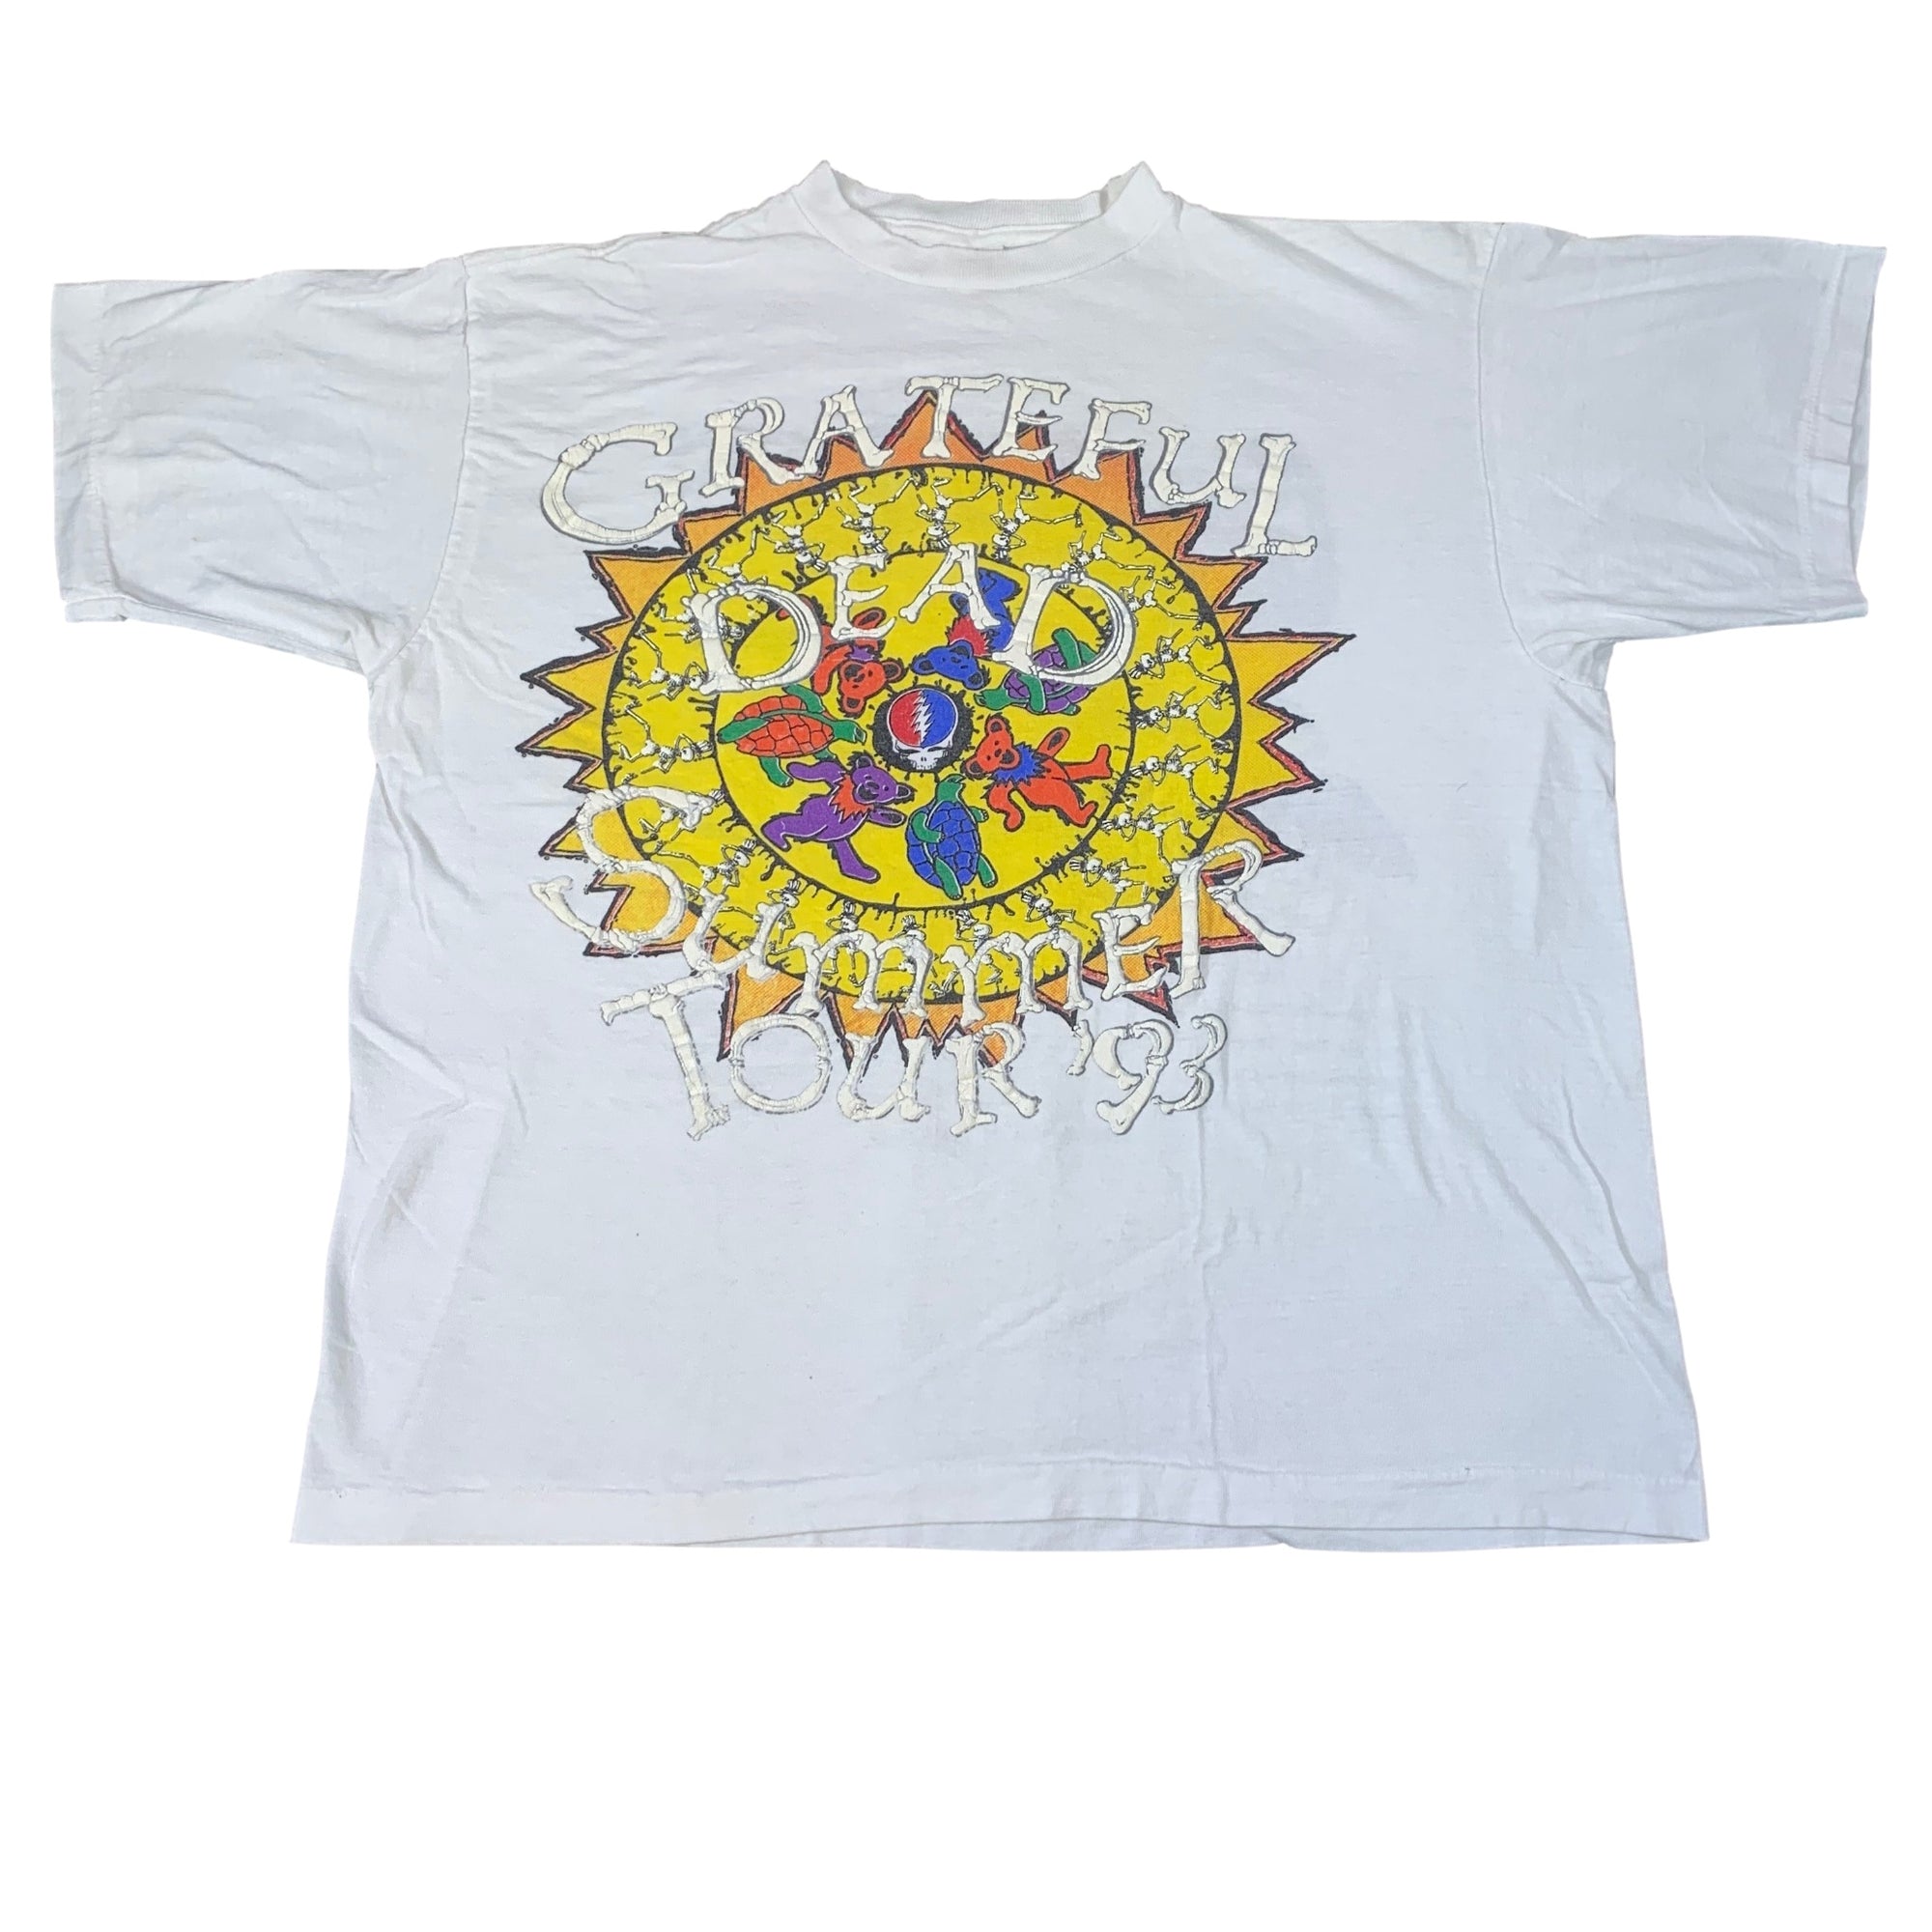 Vintage Grateful Dead "Summer 93'" T-Shirt - jointcustodydc